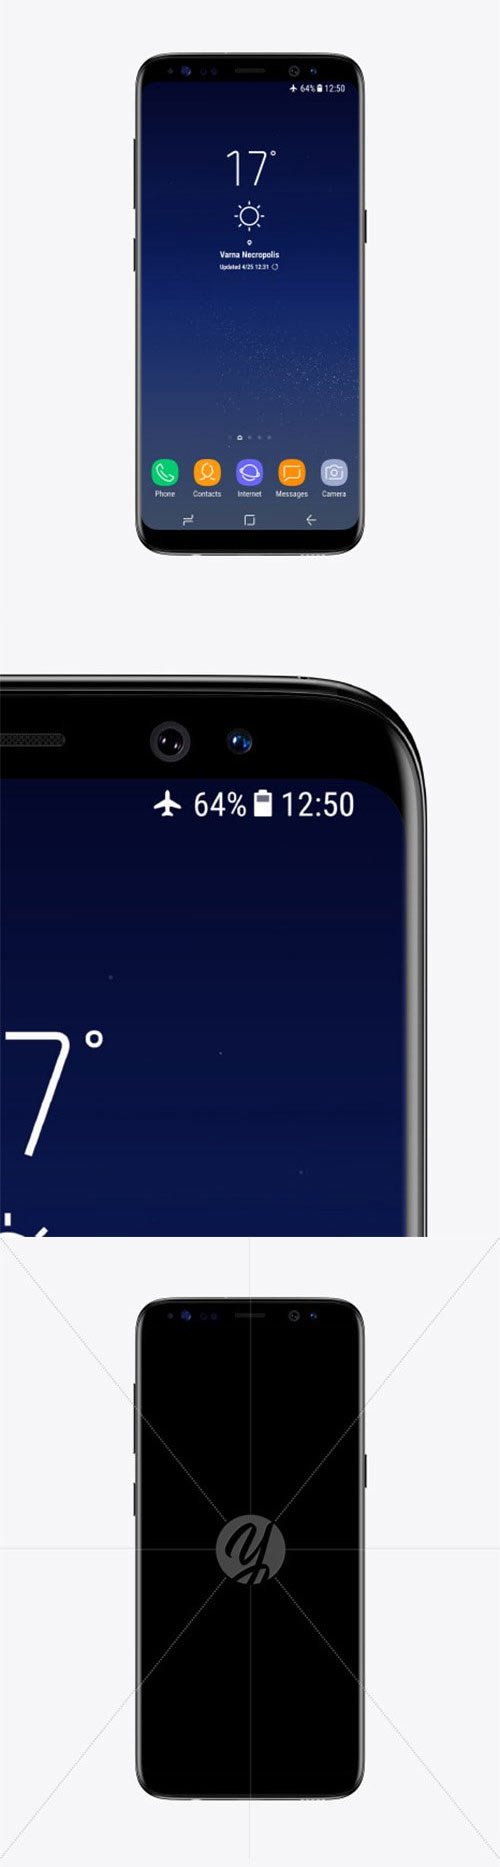 Midnight Black Samsung Galaxy S8 Phone Mockup